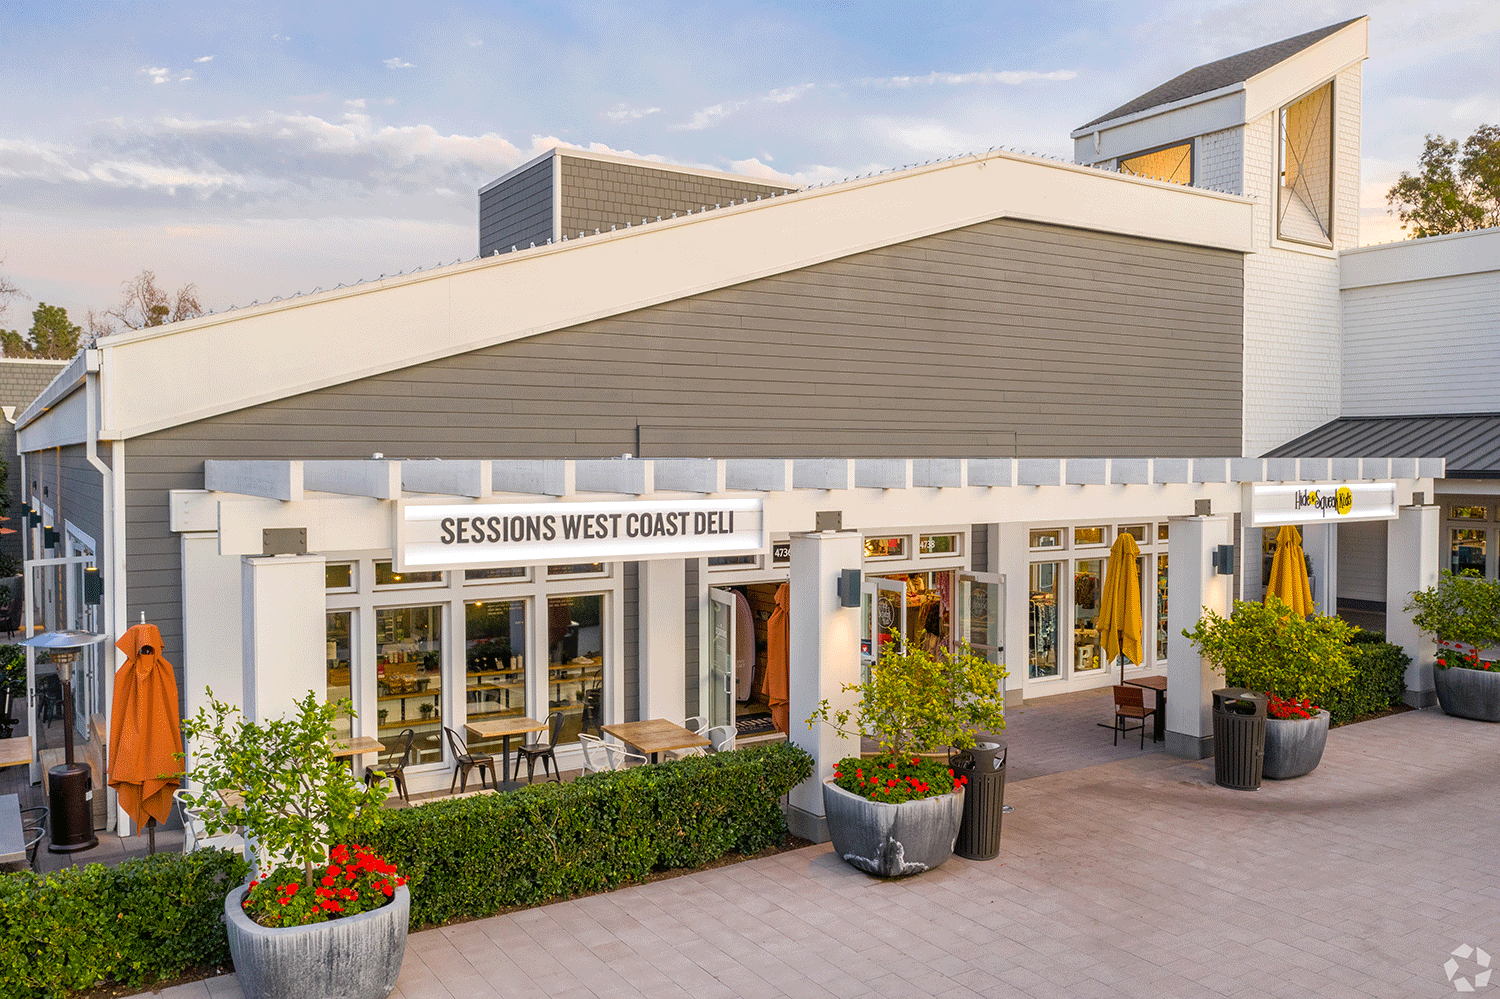  Exterior view of Sessions West Coast Deli at Woodbridge Village Center